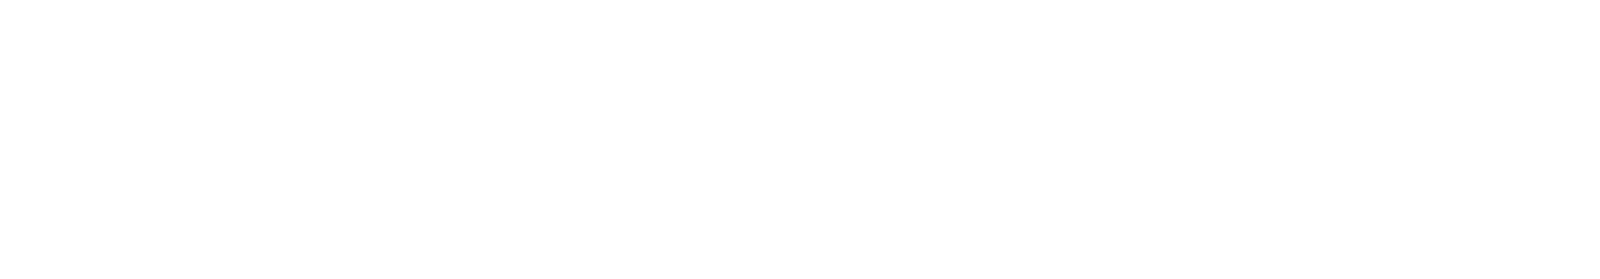 Tegfan Textiles Mobile Retina Logo